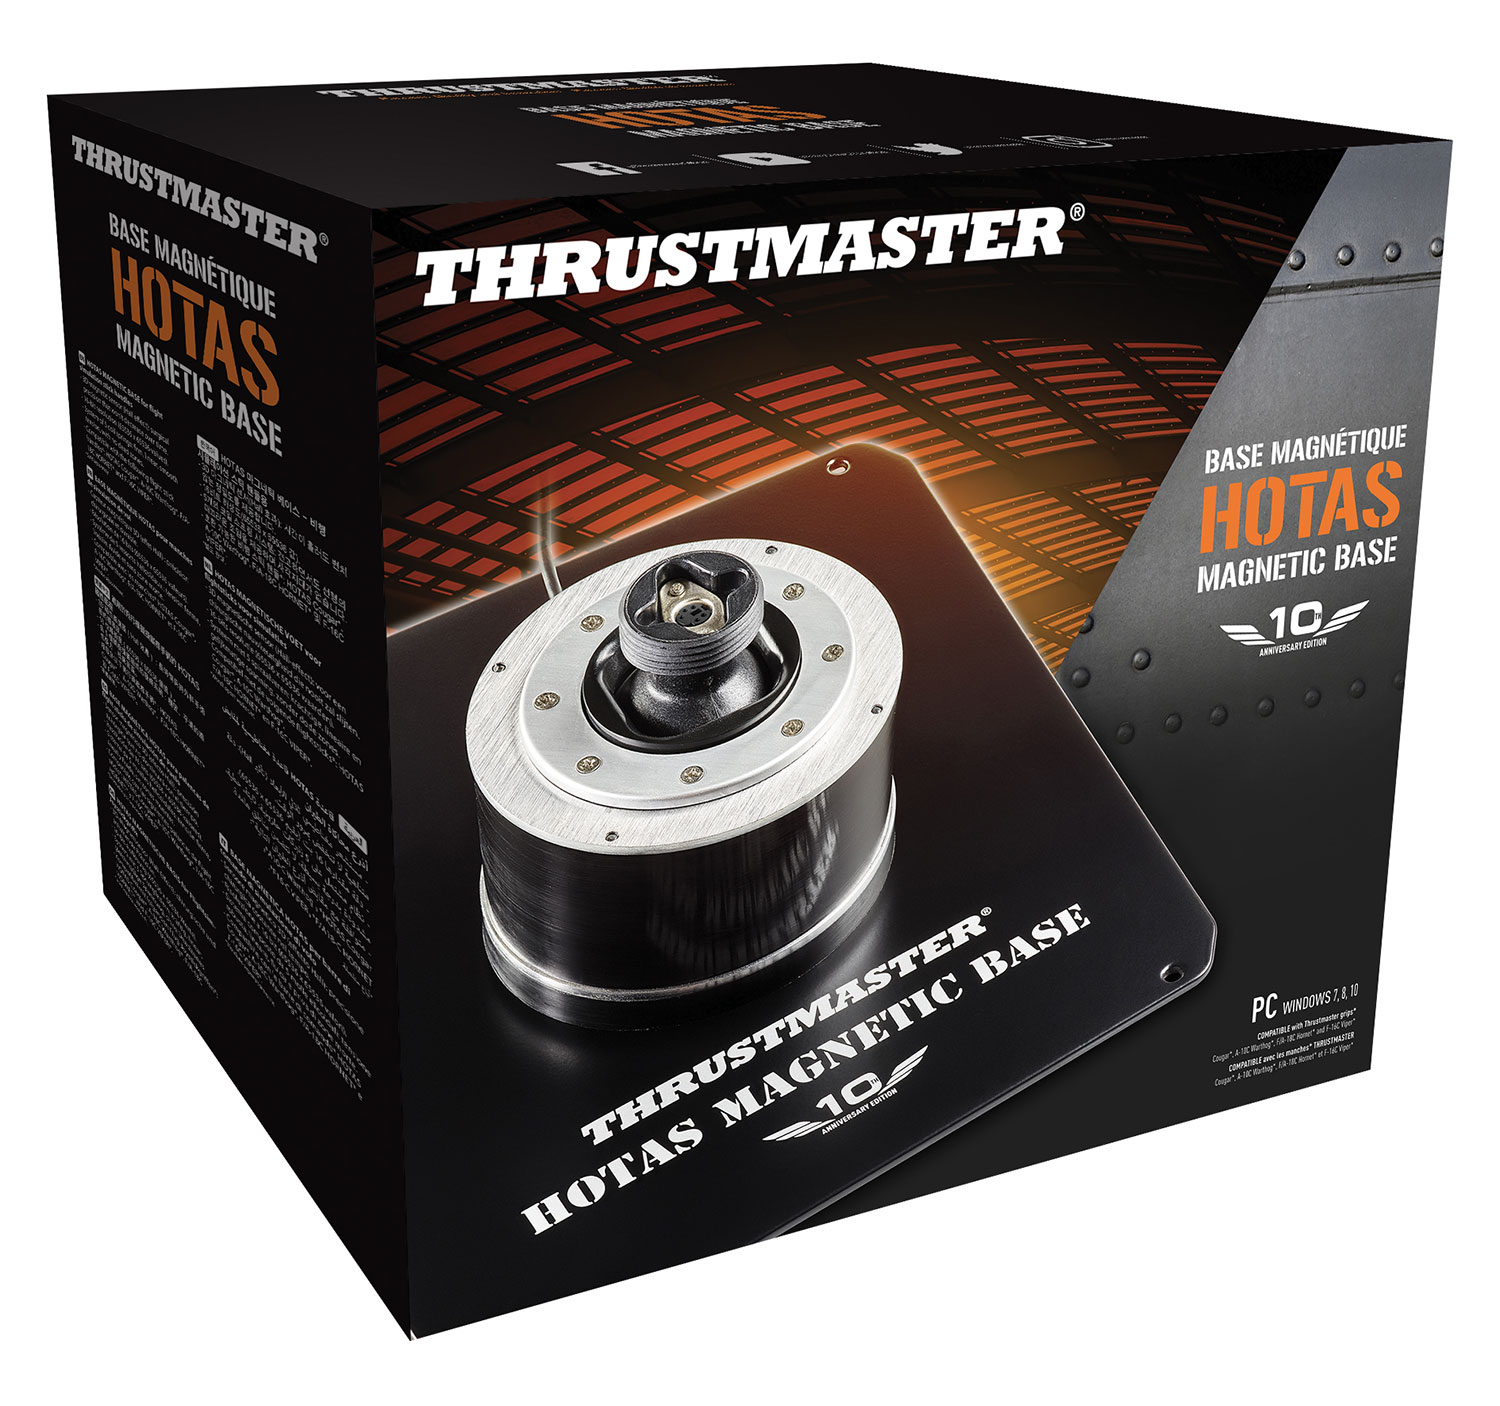 Thrustmaster - Hotas Magnetic Base